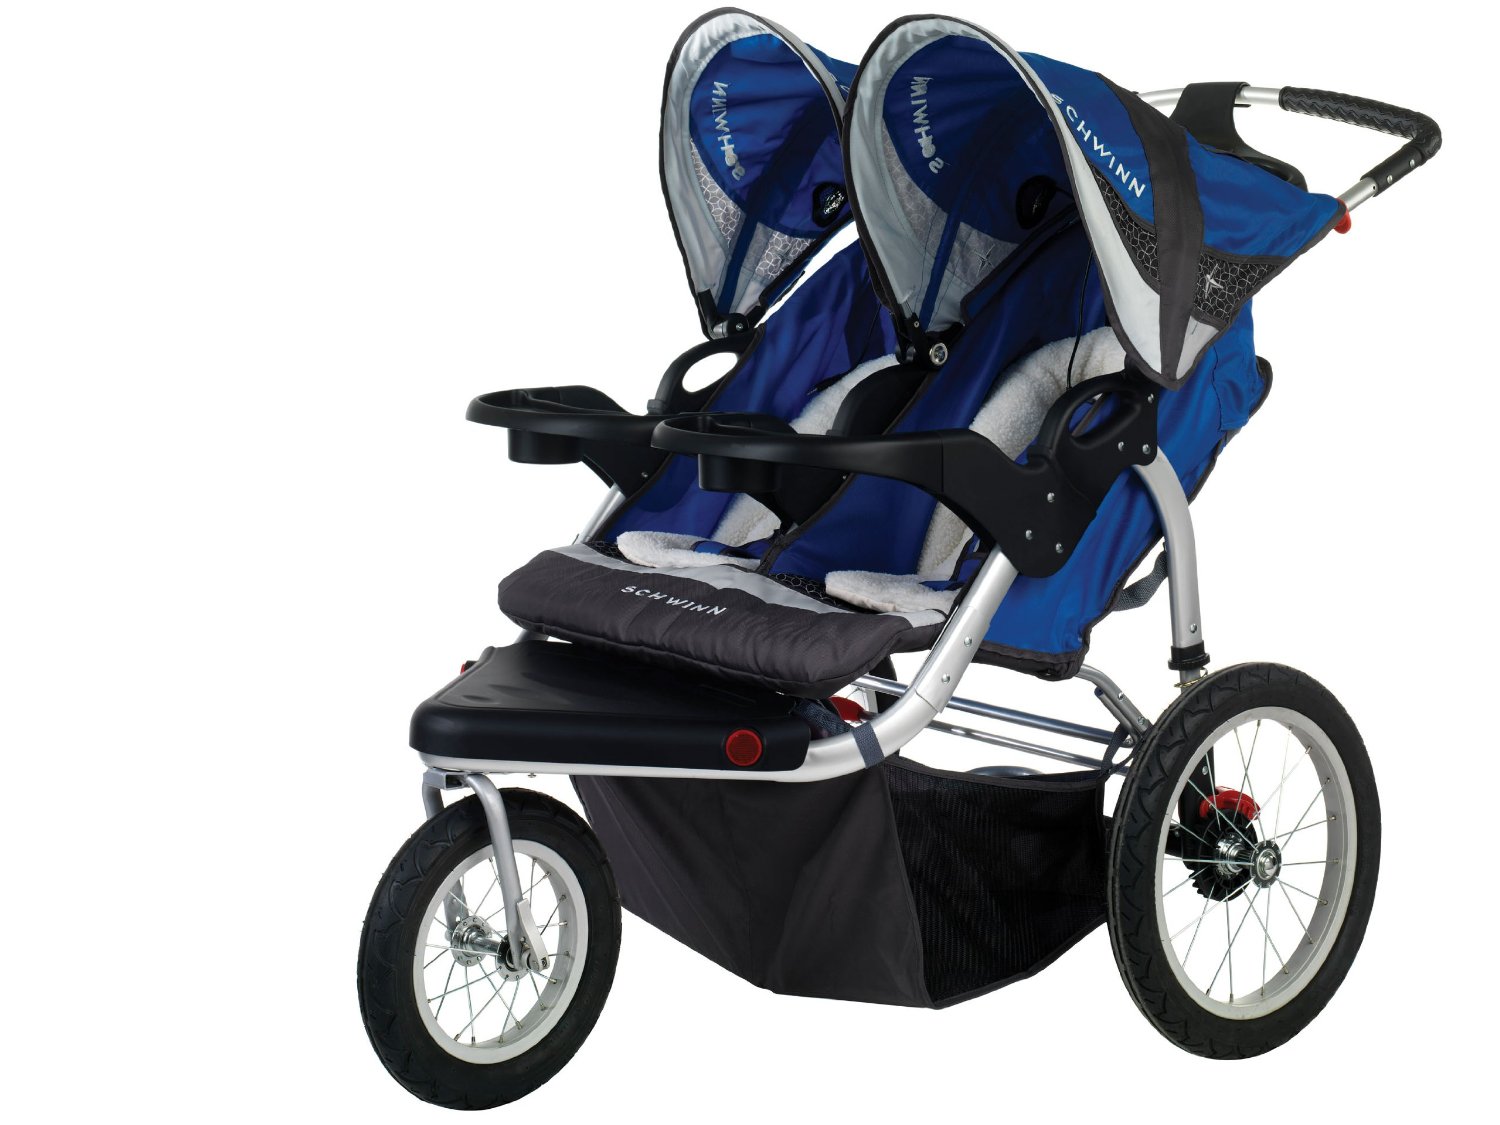 buy baby stroller